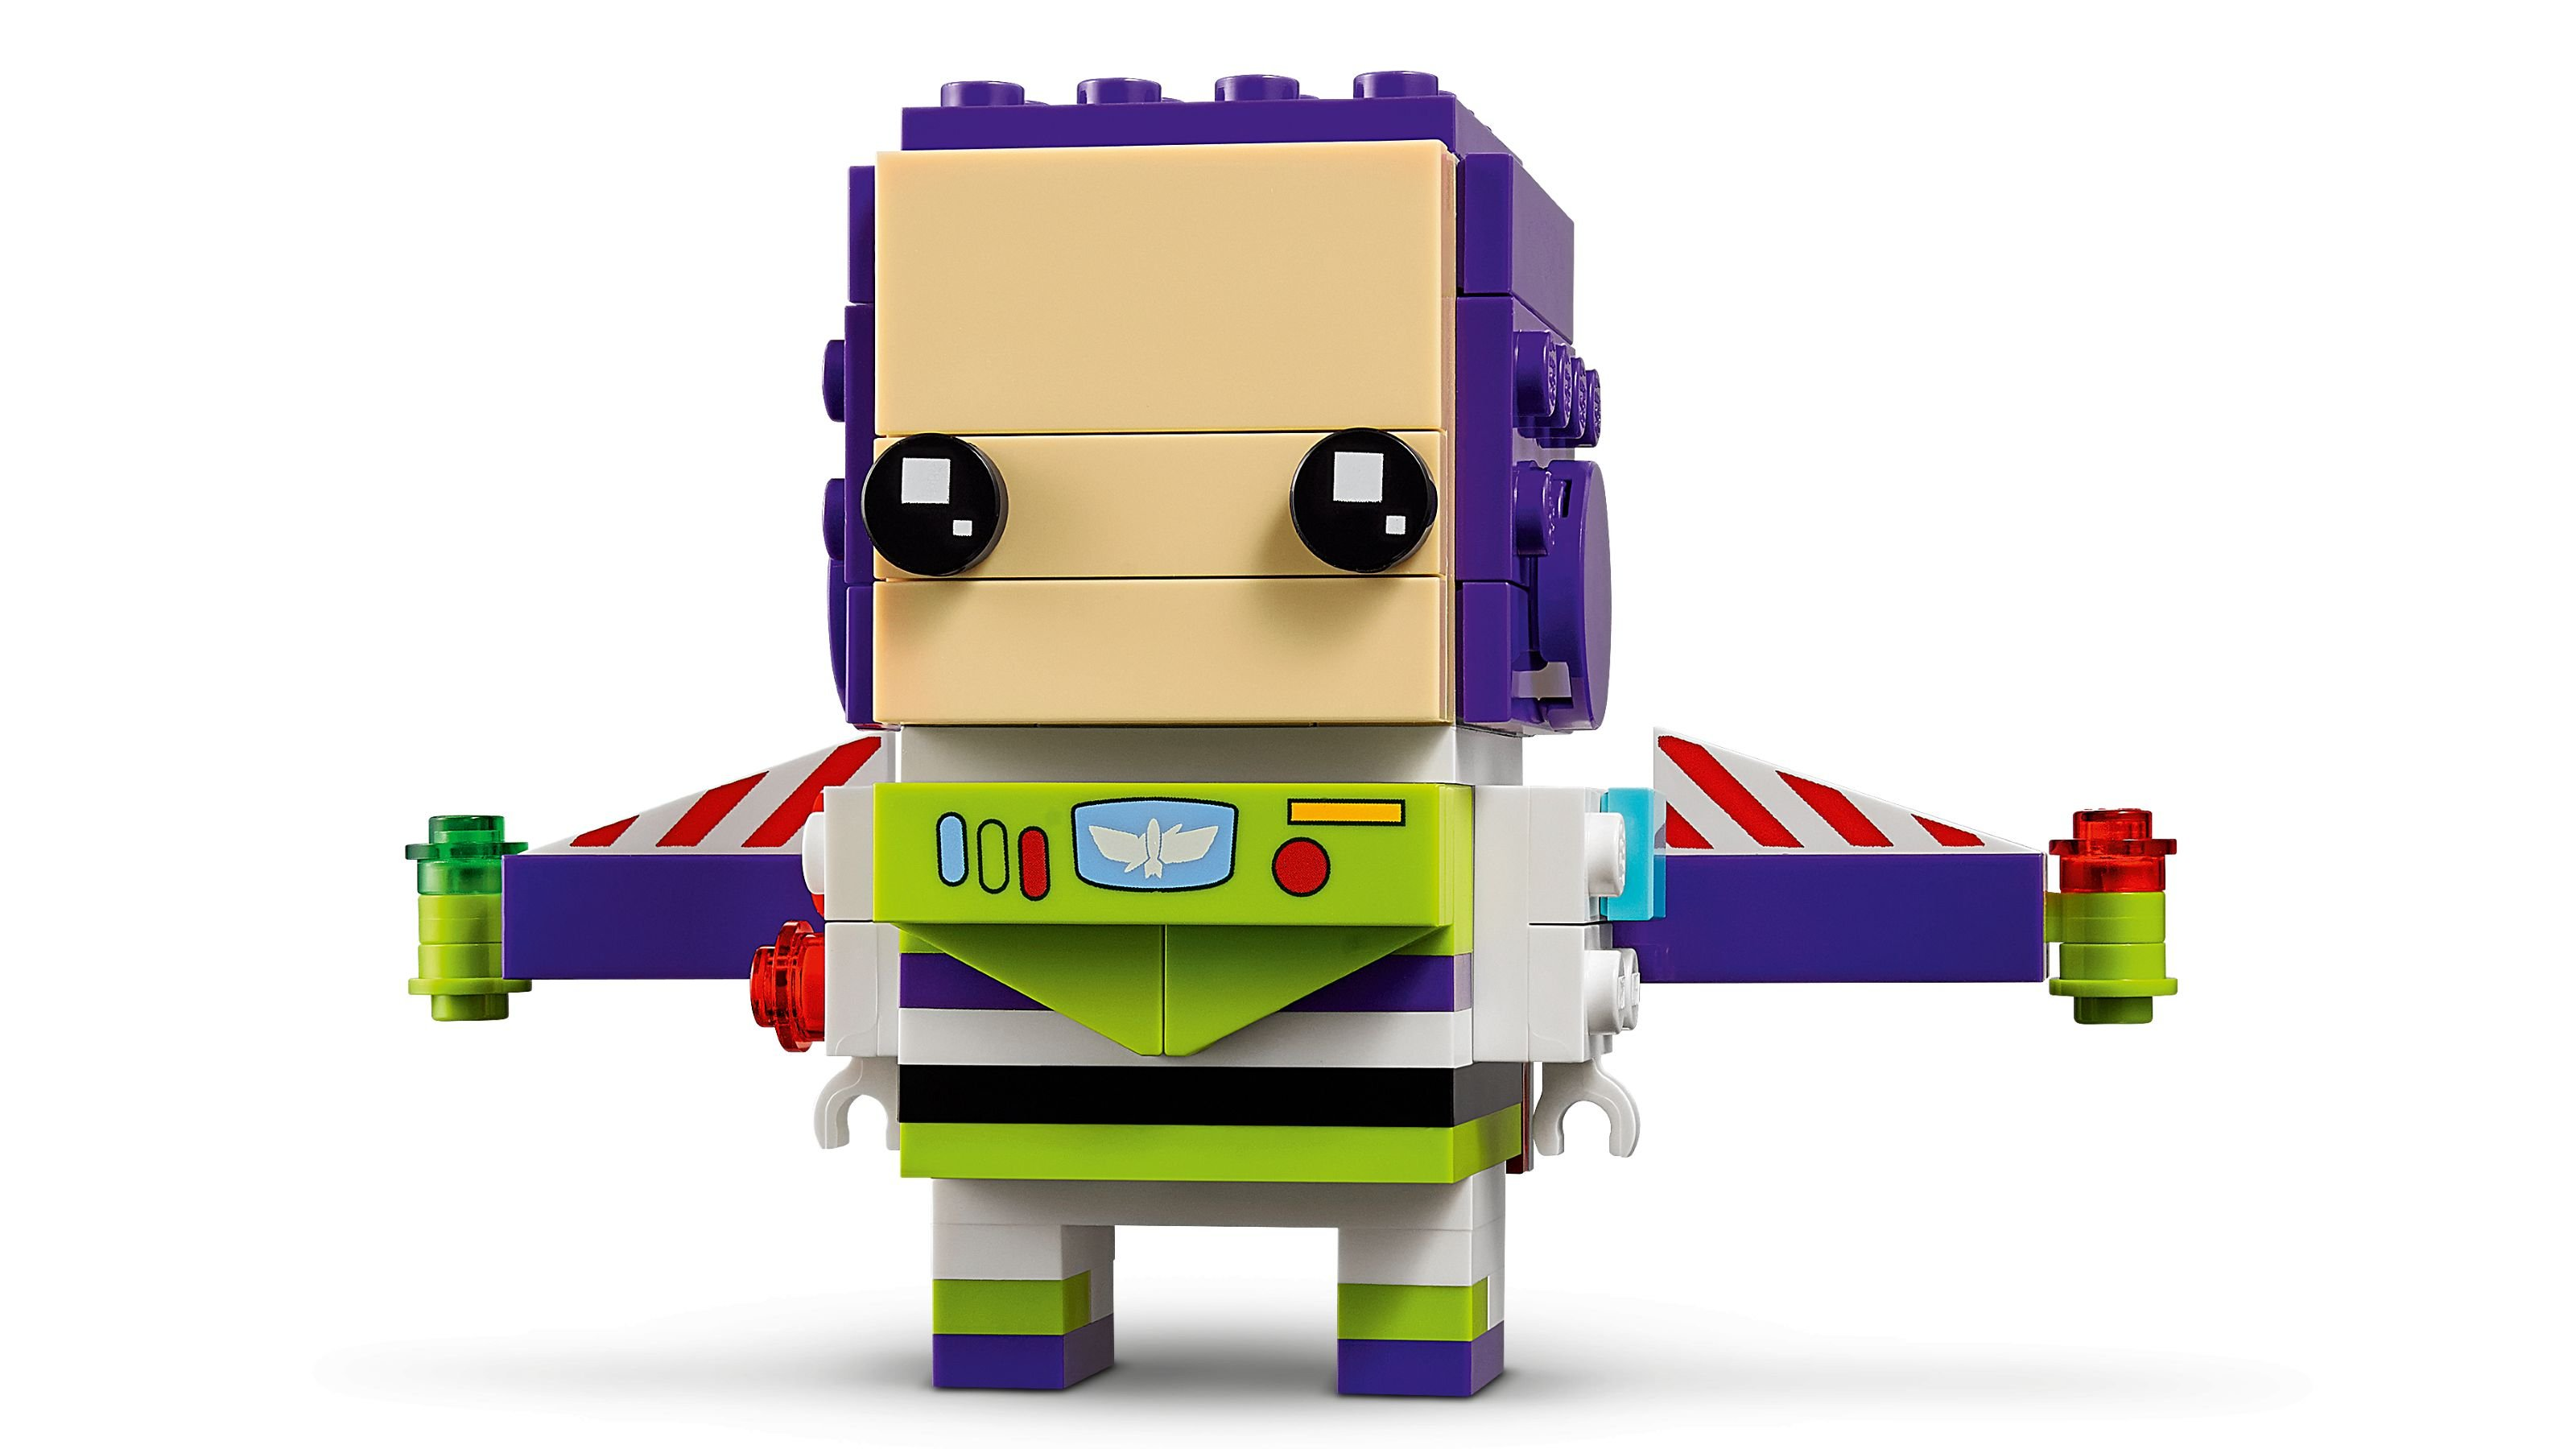 LEGO 40552 Buzz Lightyear Bausatz